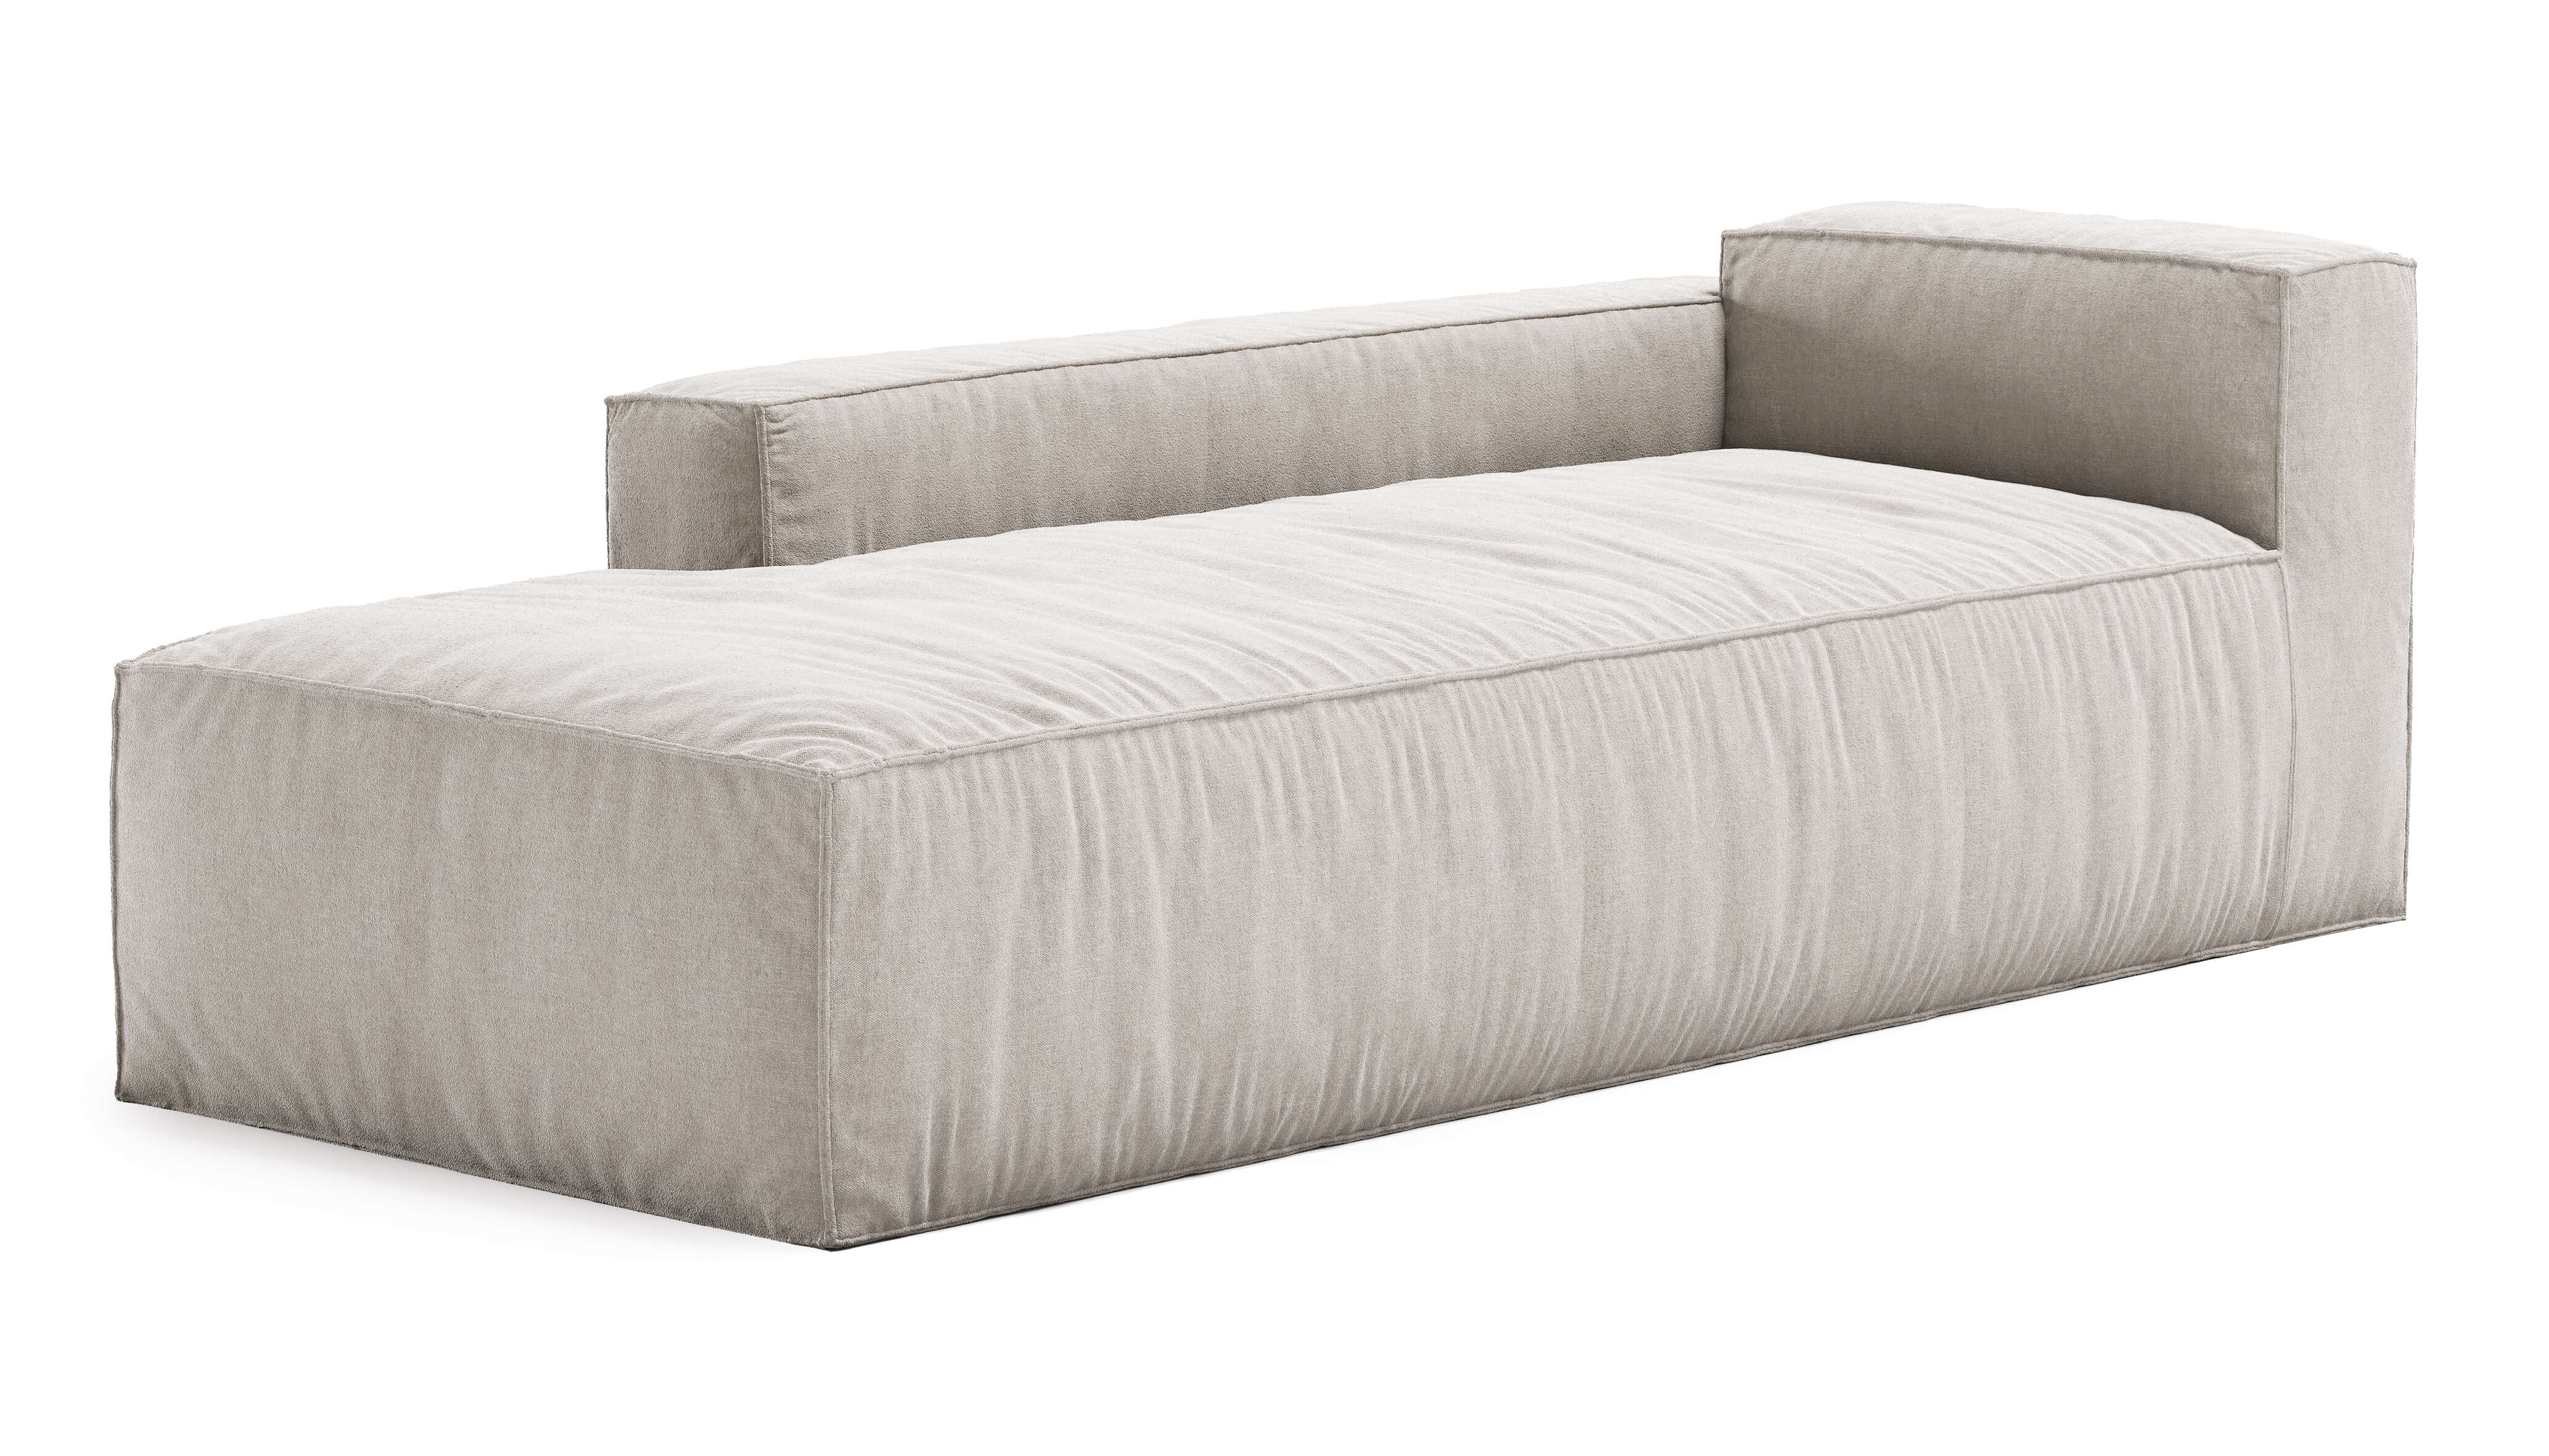 Бескаркасный диван easy Sofa